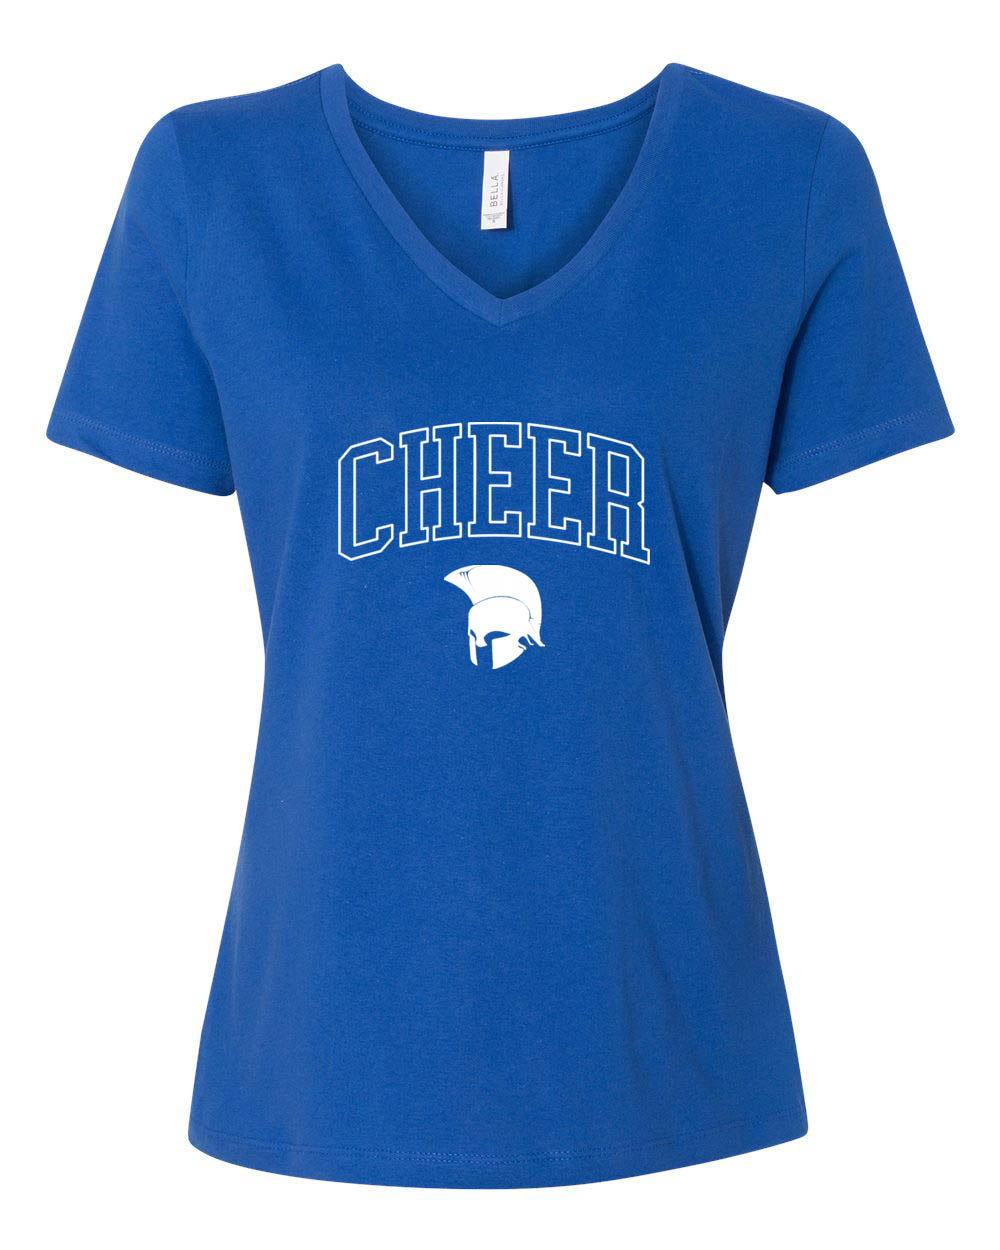 Goshen Cheer Design 2 V-neck T-Shirt